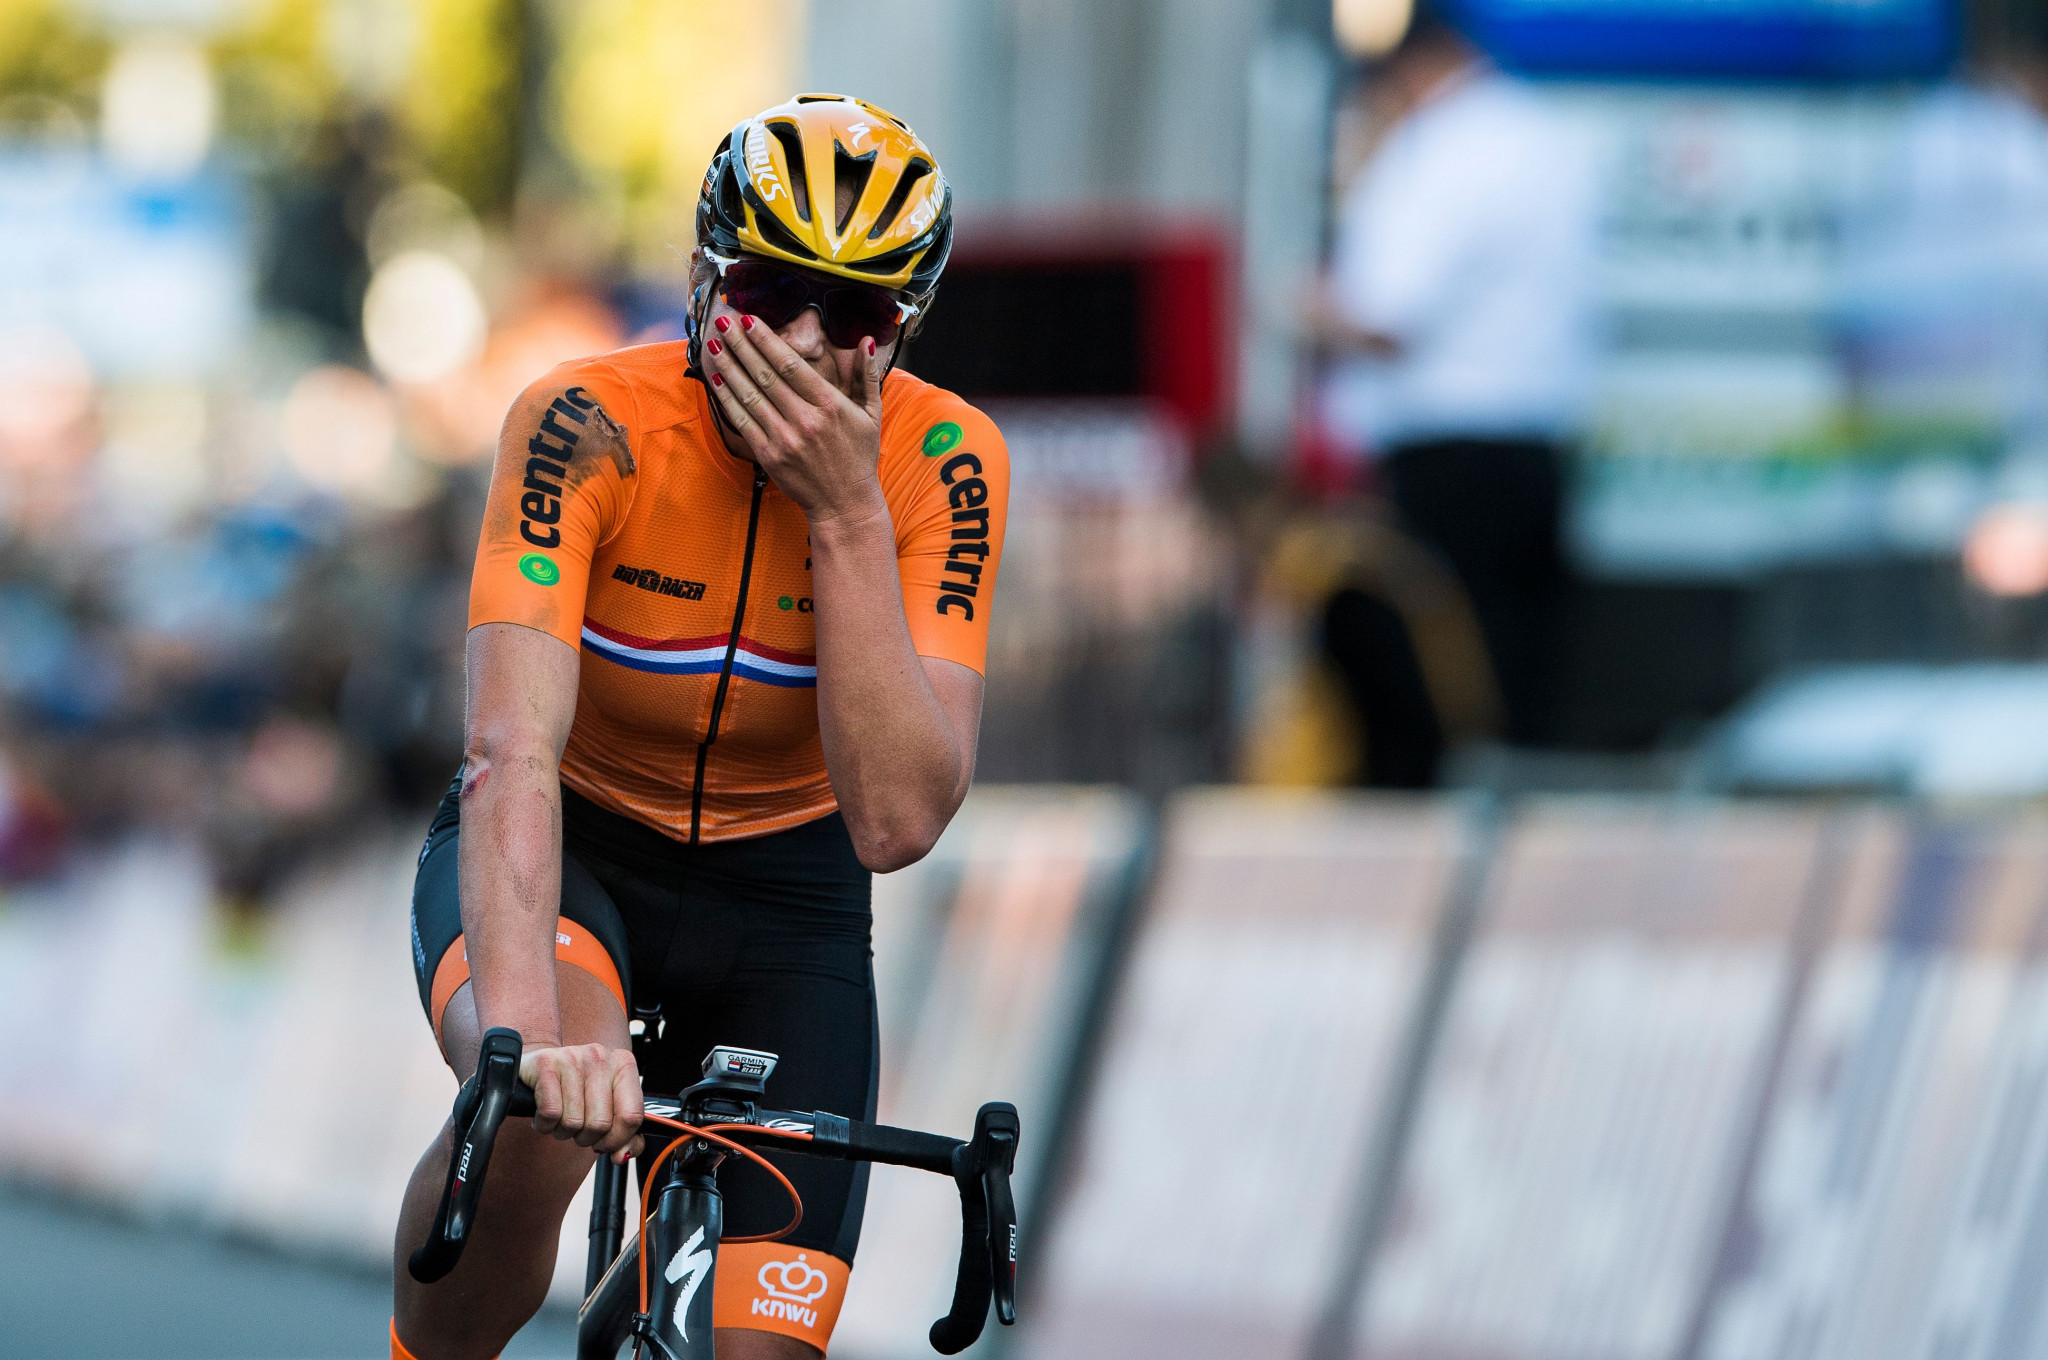 Blaak breaks clear to win women's elite title at UCI Road World Championships